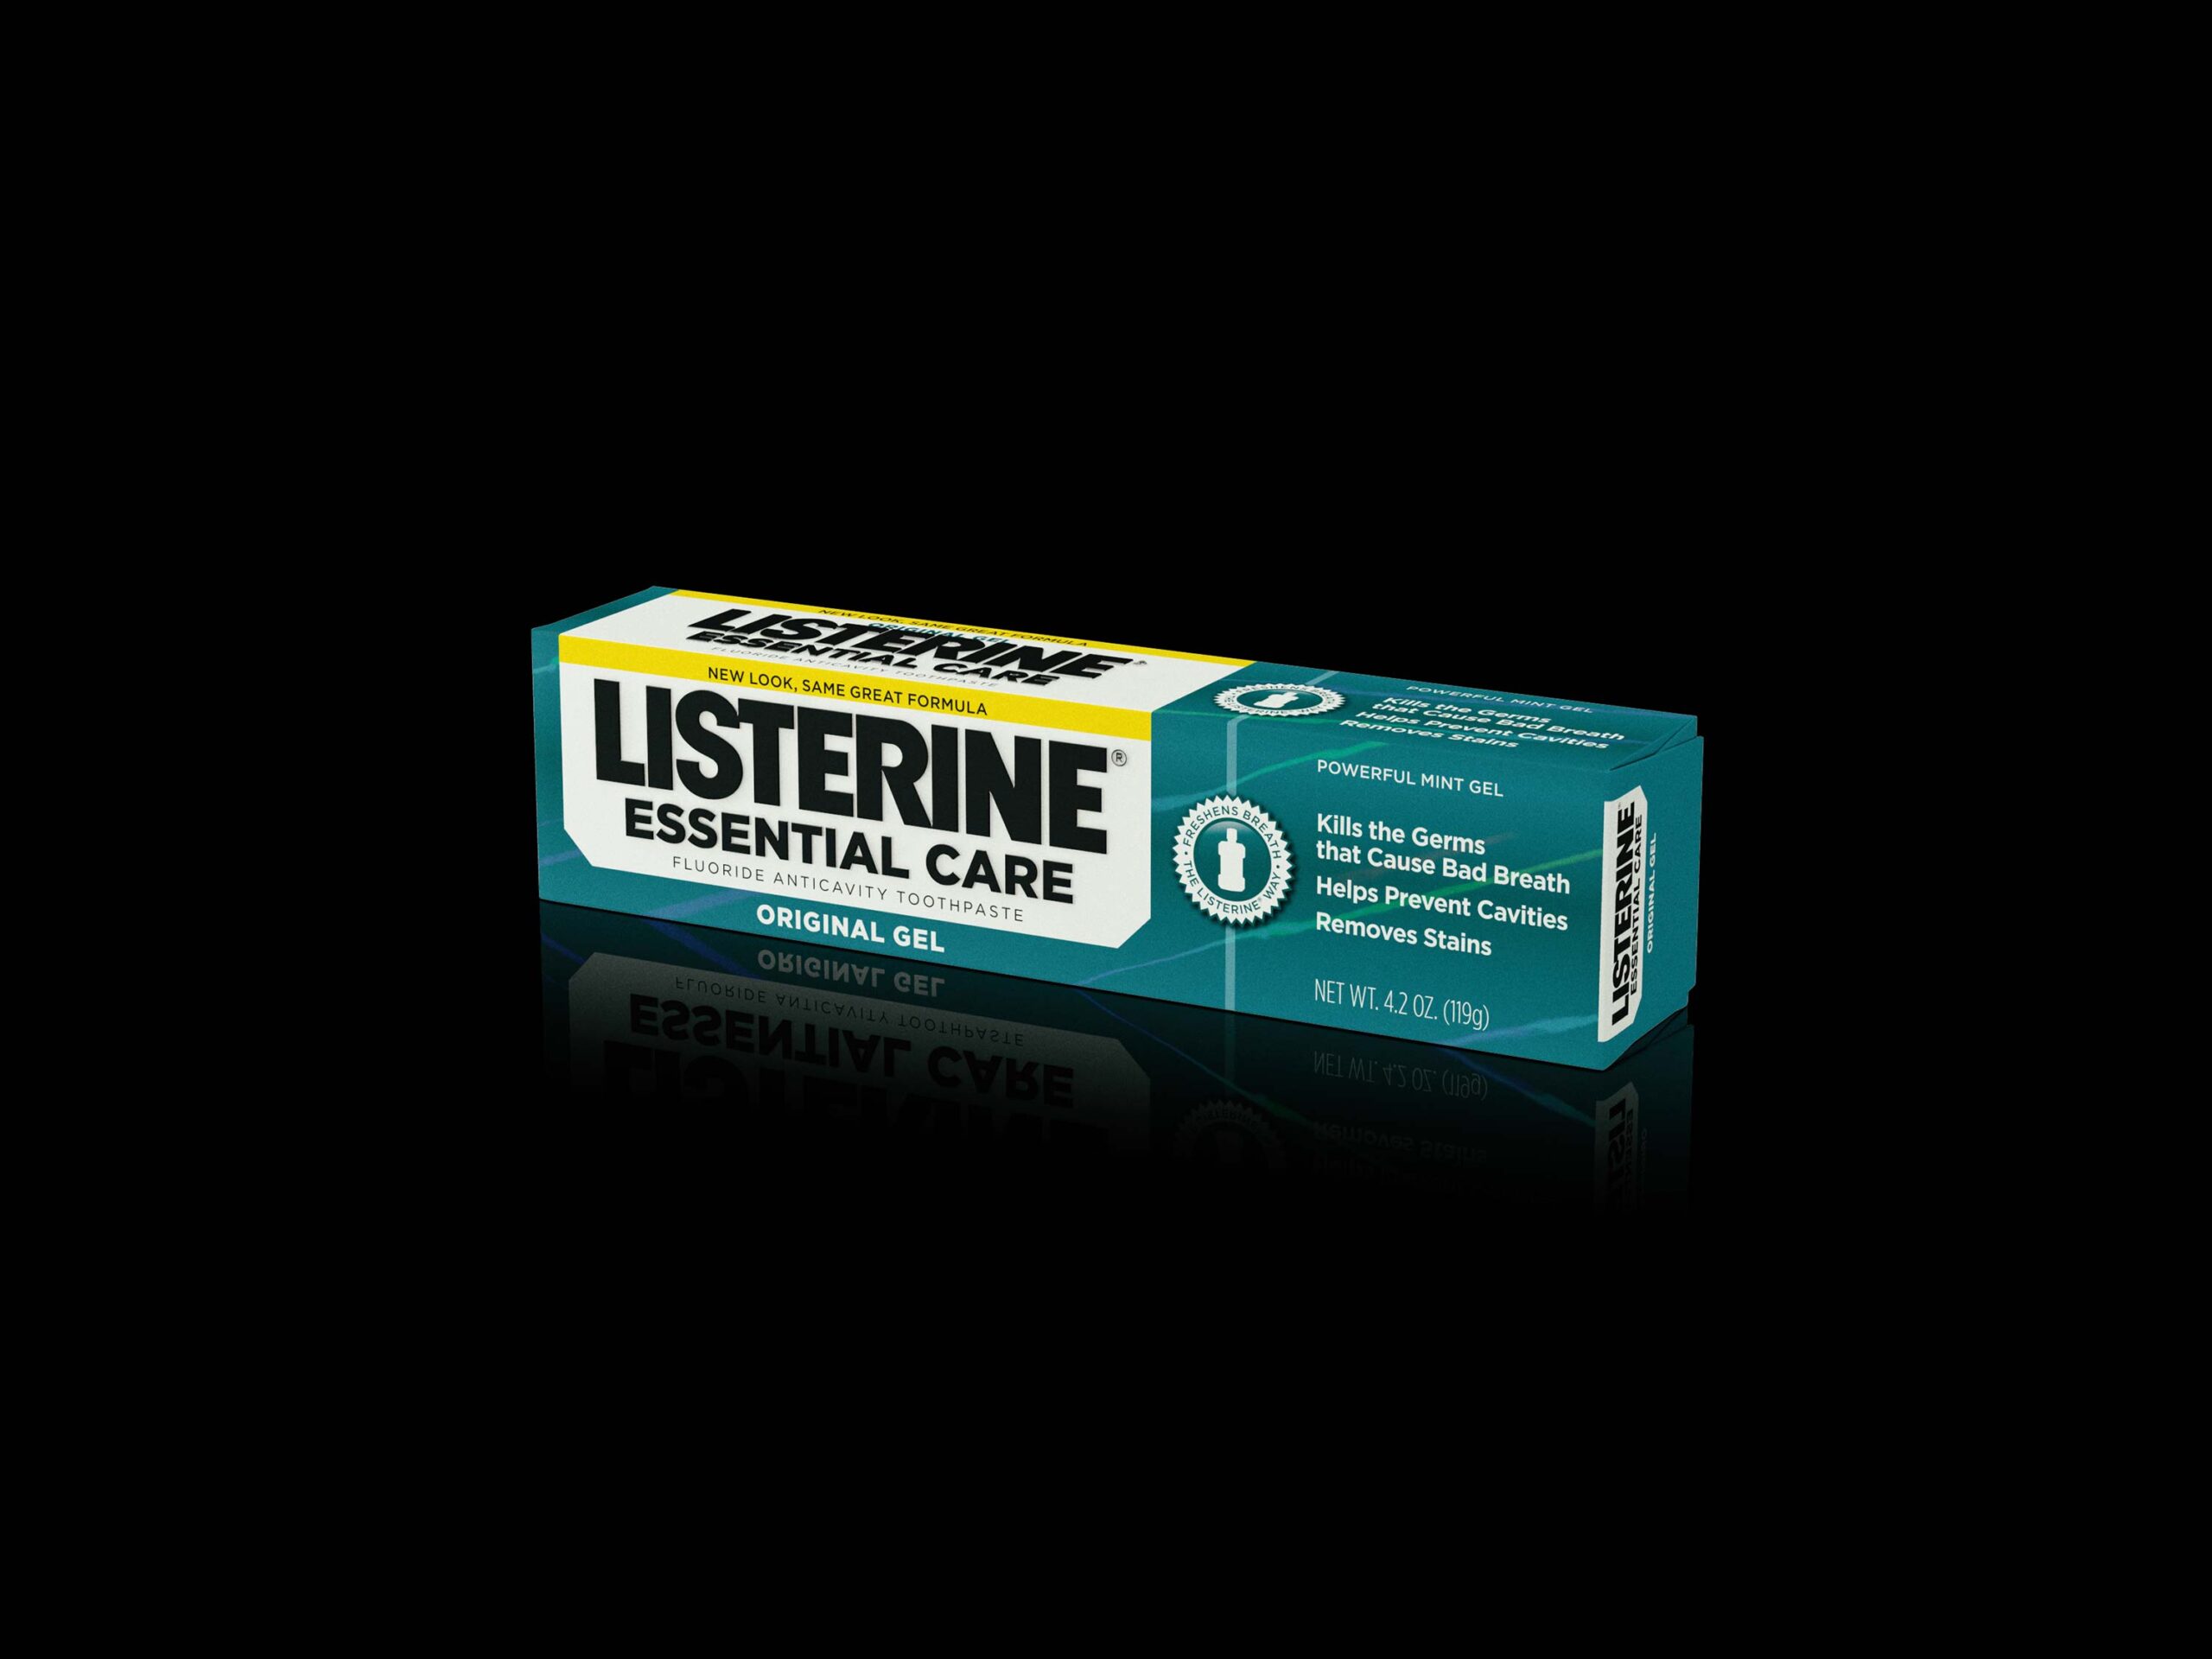  - Listerine innovation